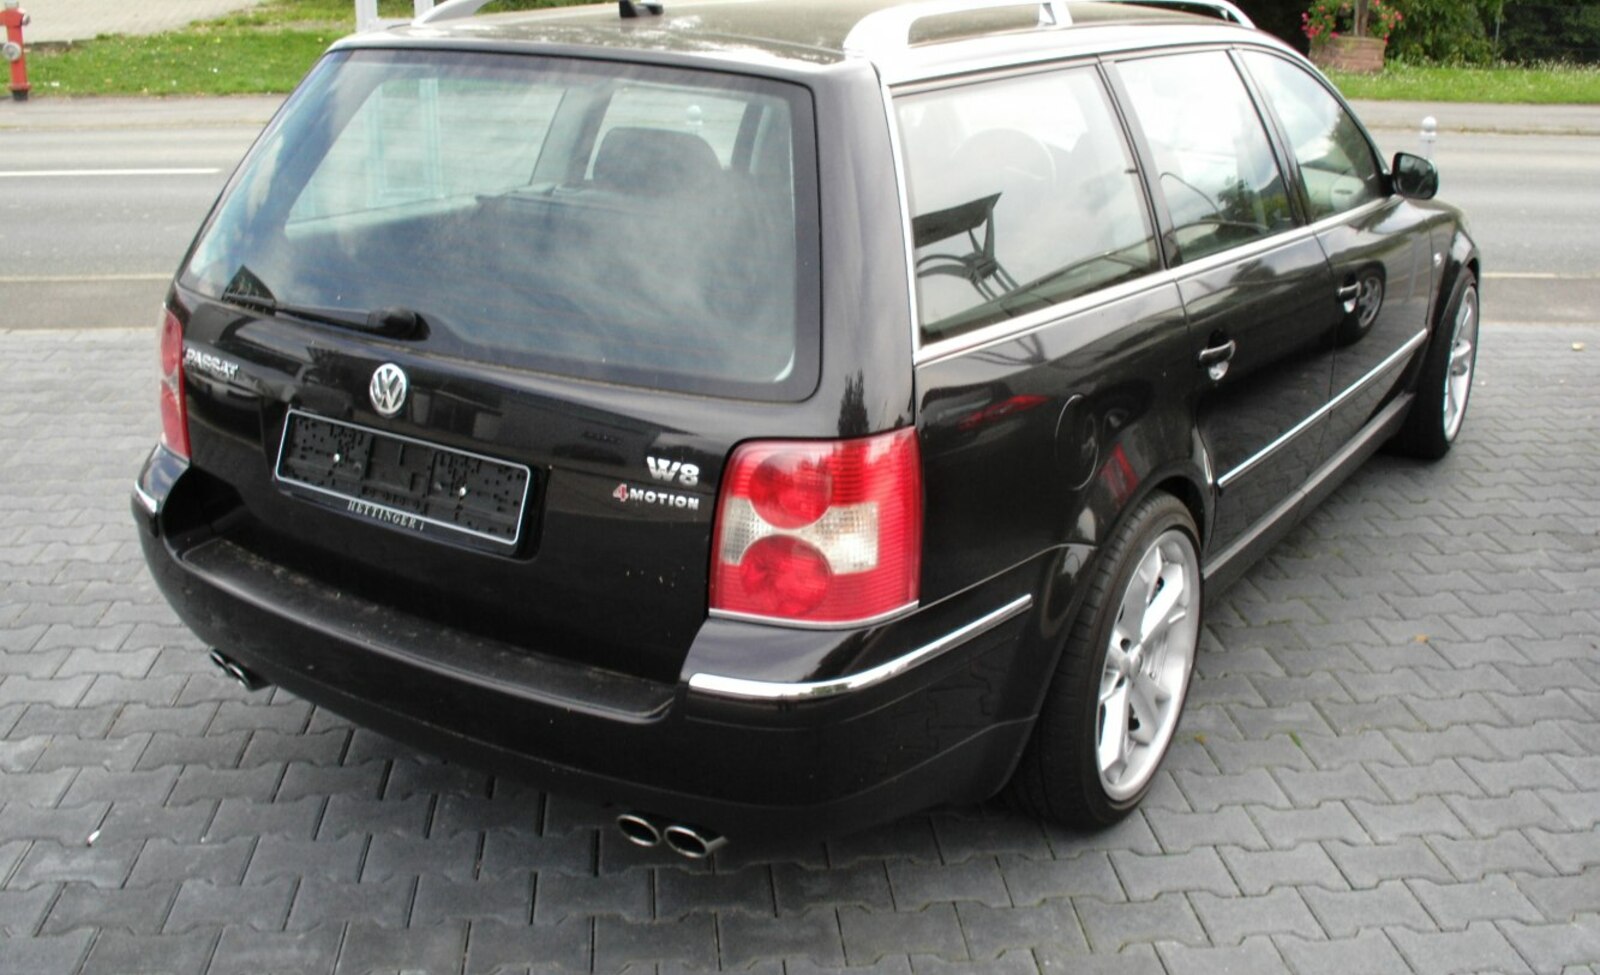 2000-2003 Volkswagen Passat Variant (B5.5) 2.3 V5 (170 Hp) 4MOTION